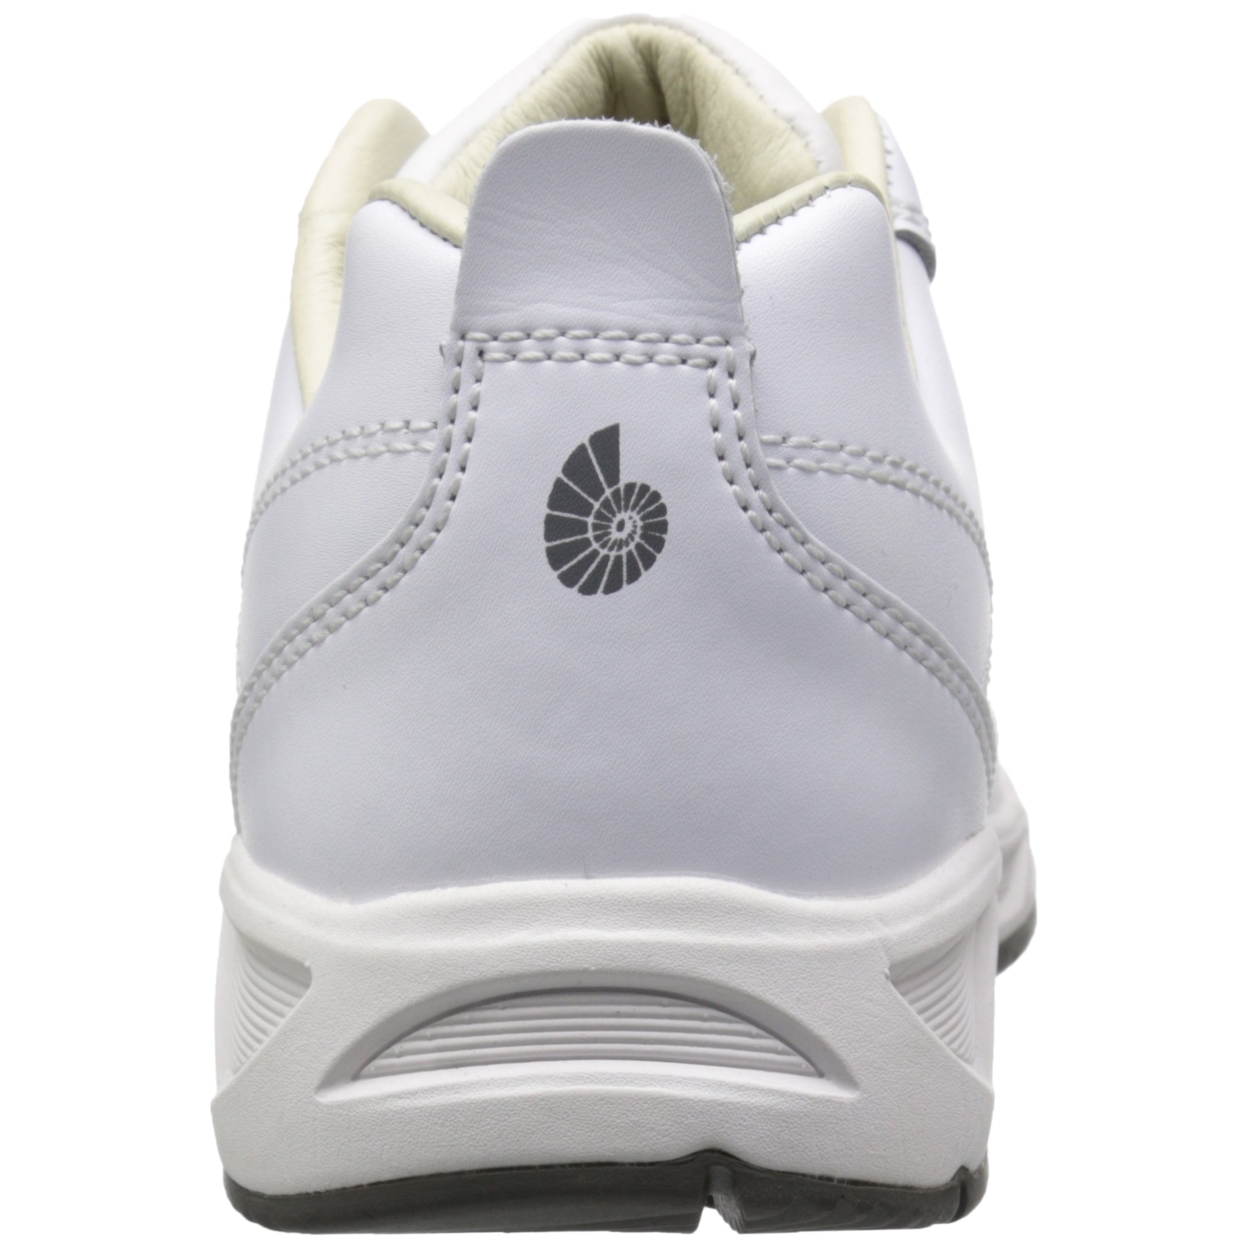 FSI FOOTWEAR SPECIALTIES INTERNATIONAL NAUTILUS Nautilus 4046 ESD No Exposed Metal Soft Toe Clean Room Athletic Shoe WHITE - WHITE, 7-M